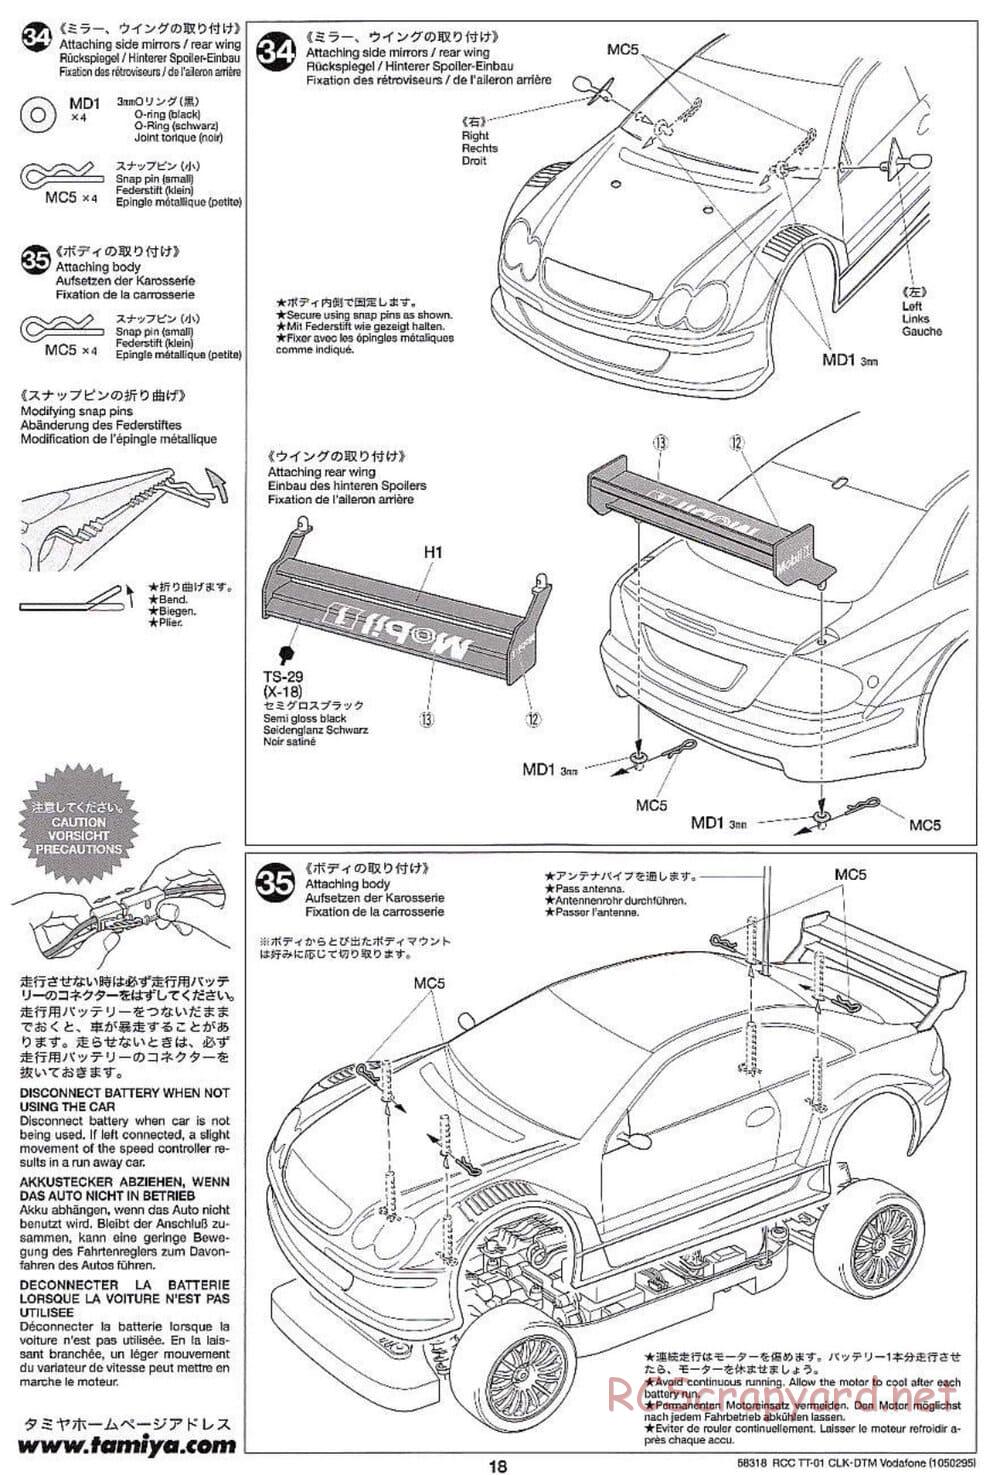 Tamiya - Mercedes-Benz CLK-DTM Team Vodafone AMG-Mercedes - TT-01 Chassis - Manual - Page 18